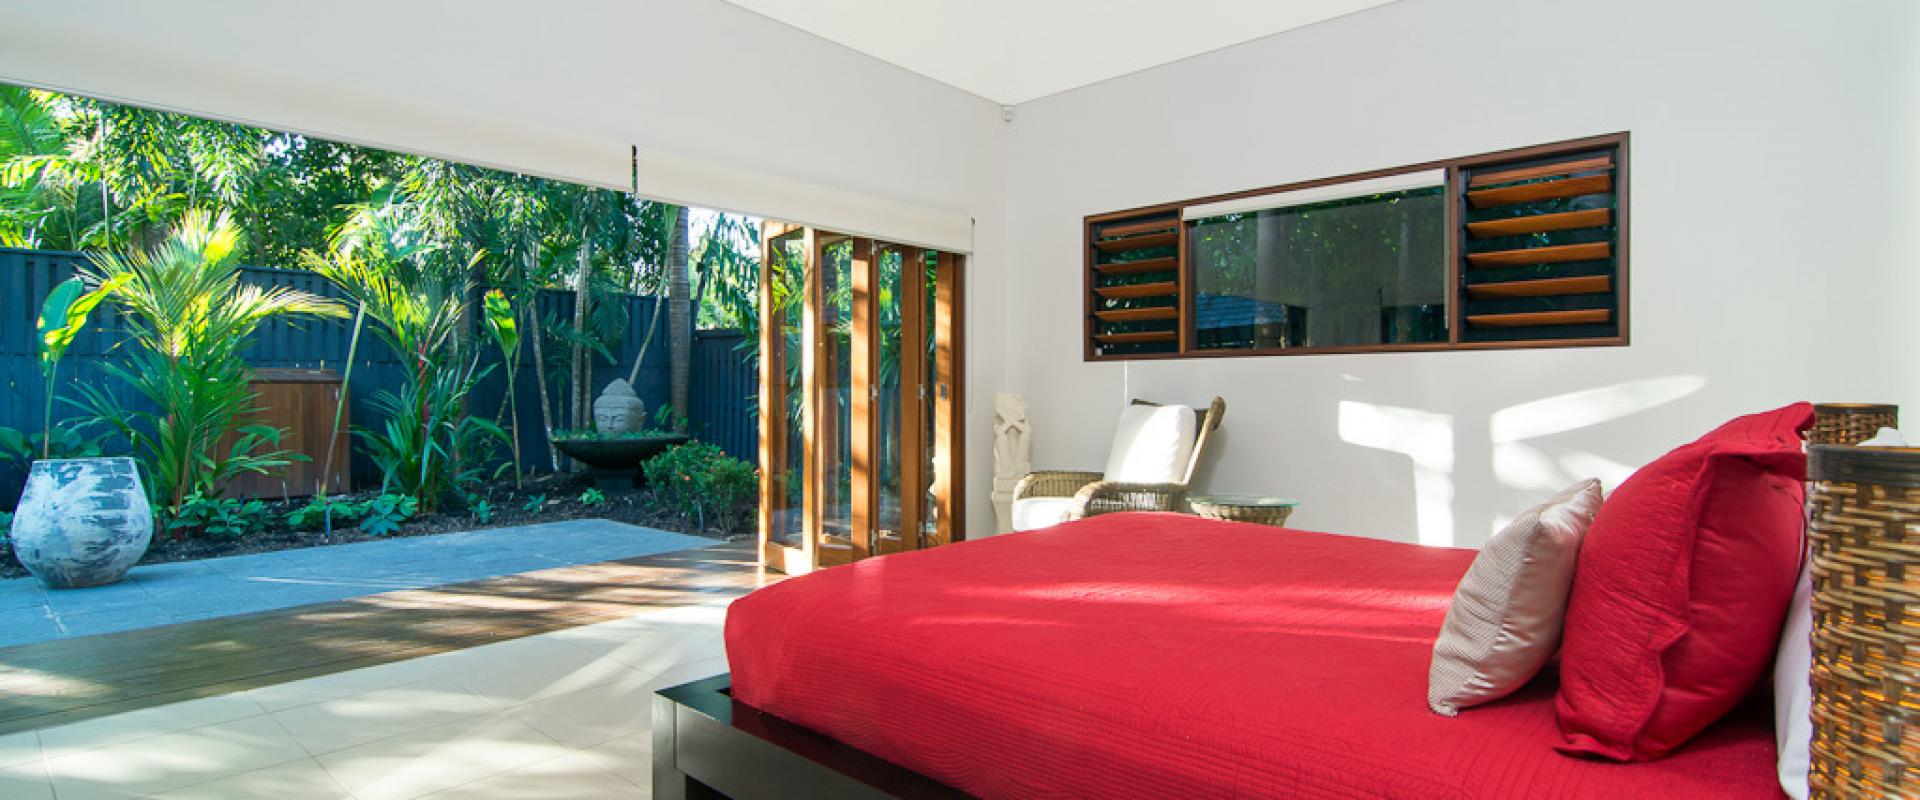 Luxury 5 bedroom home near Four Mile Beach Port Douglas